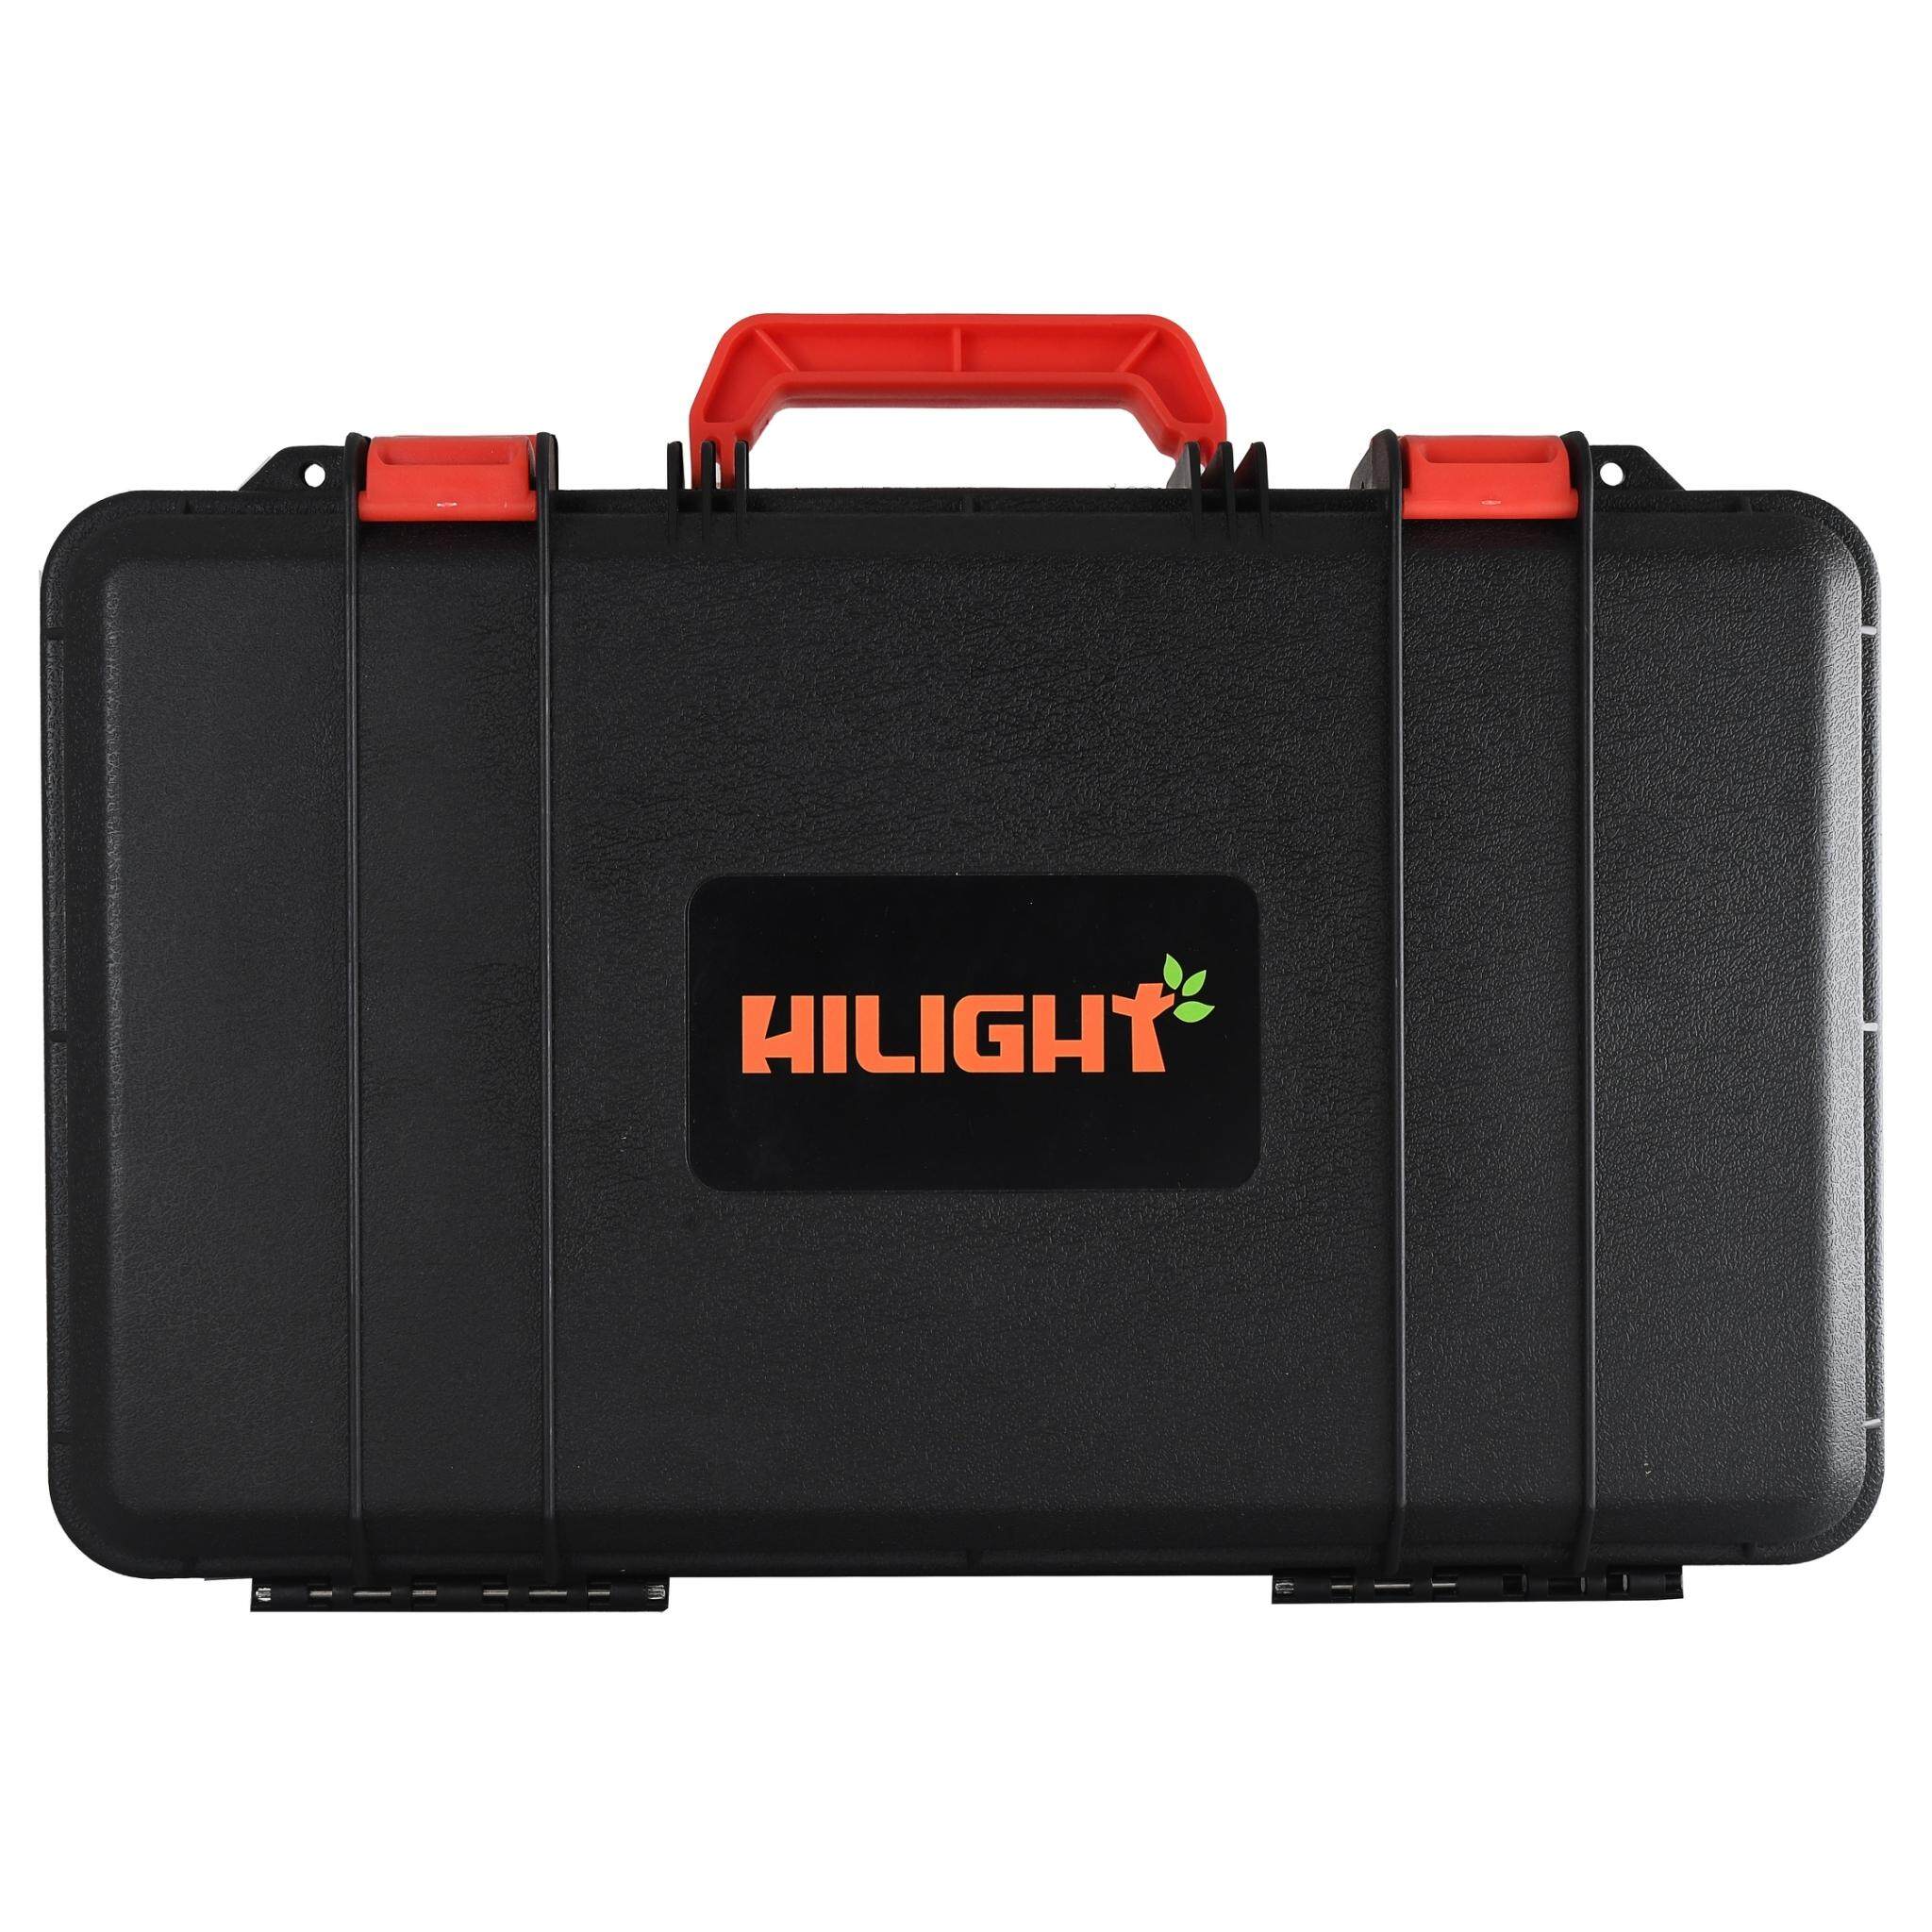 Hilight CASE HARD CASE รุ่น HL-4325B